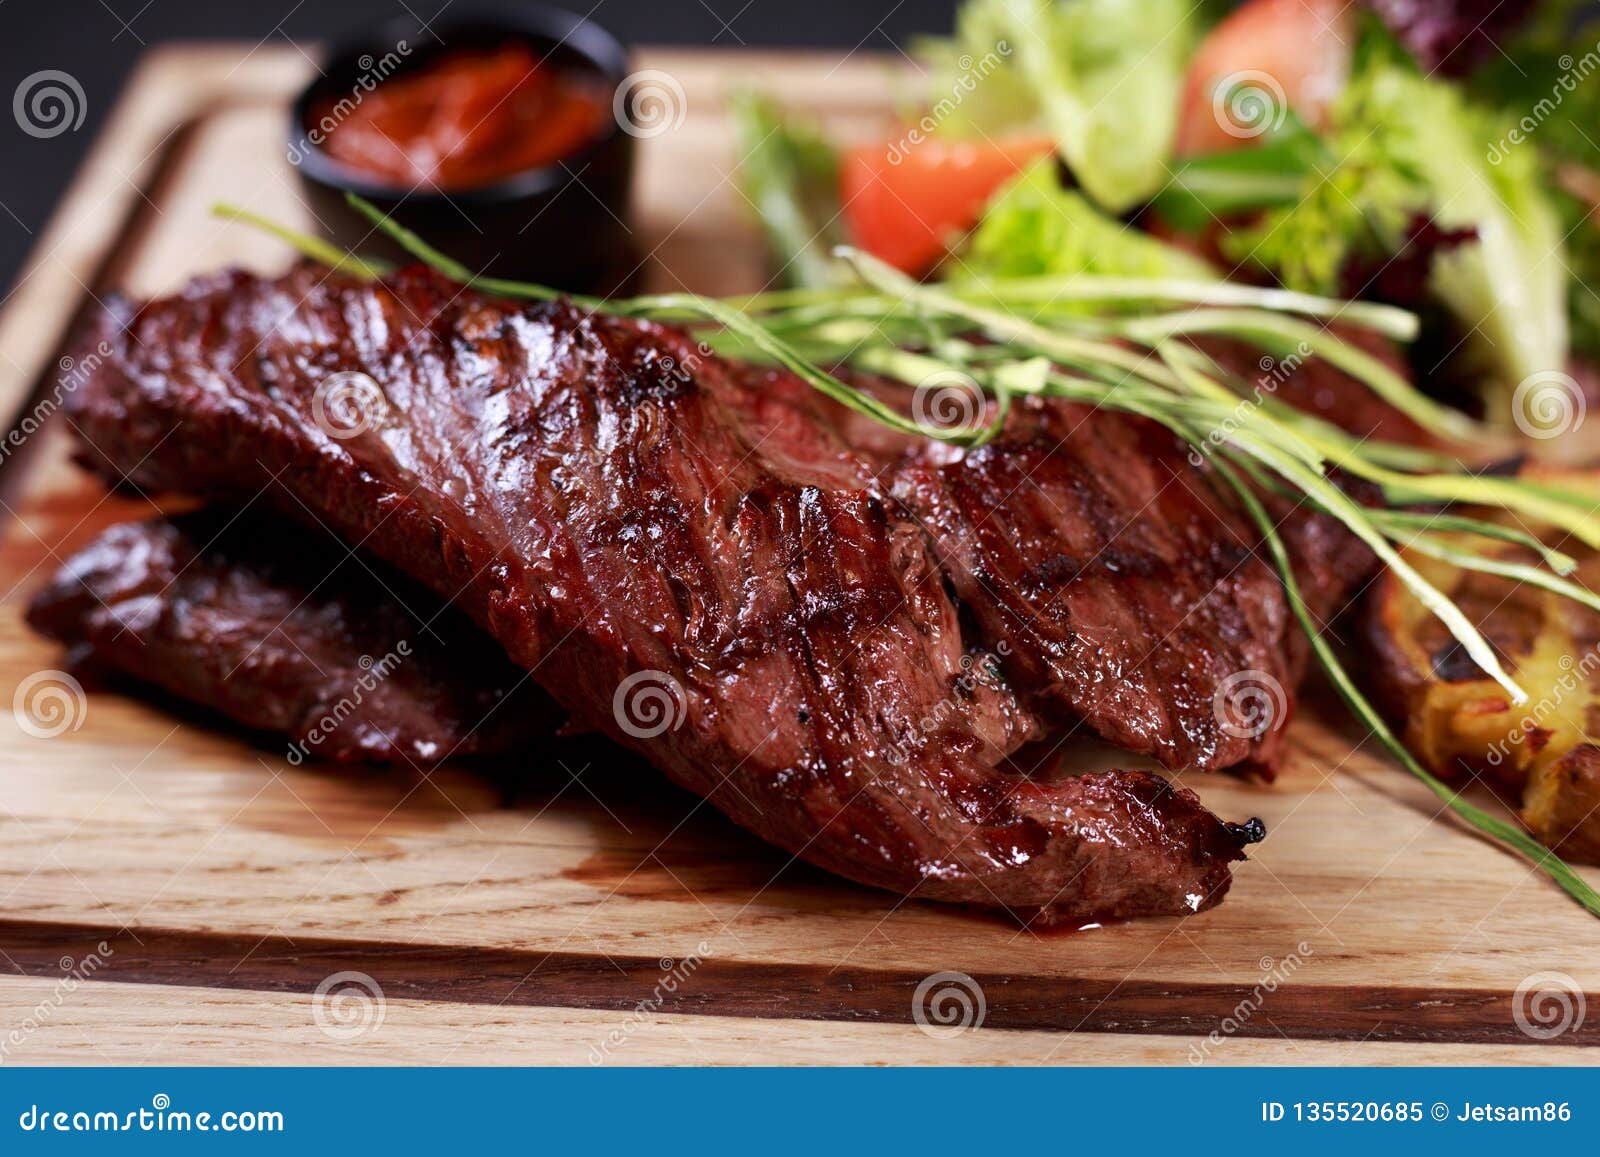 skirt steak, grill and barbeque restaurant menu